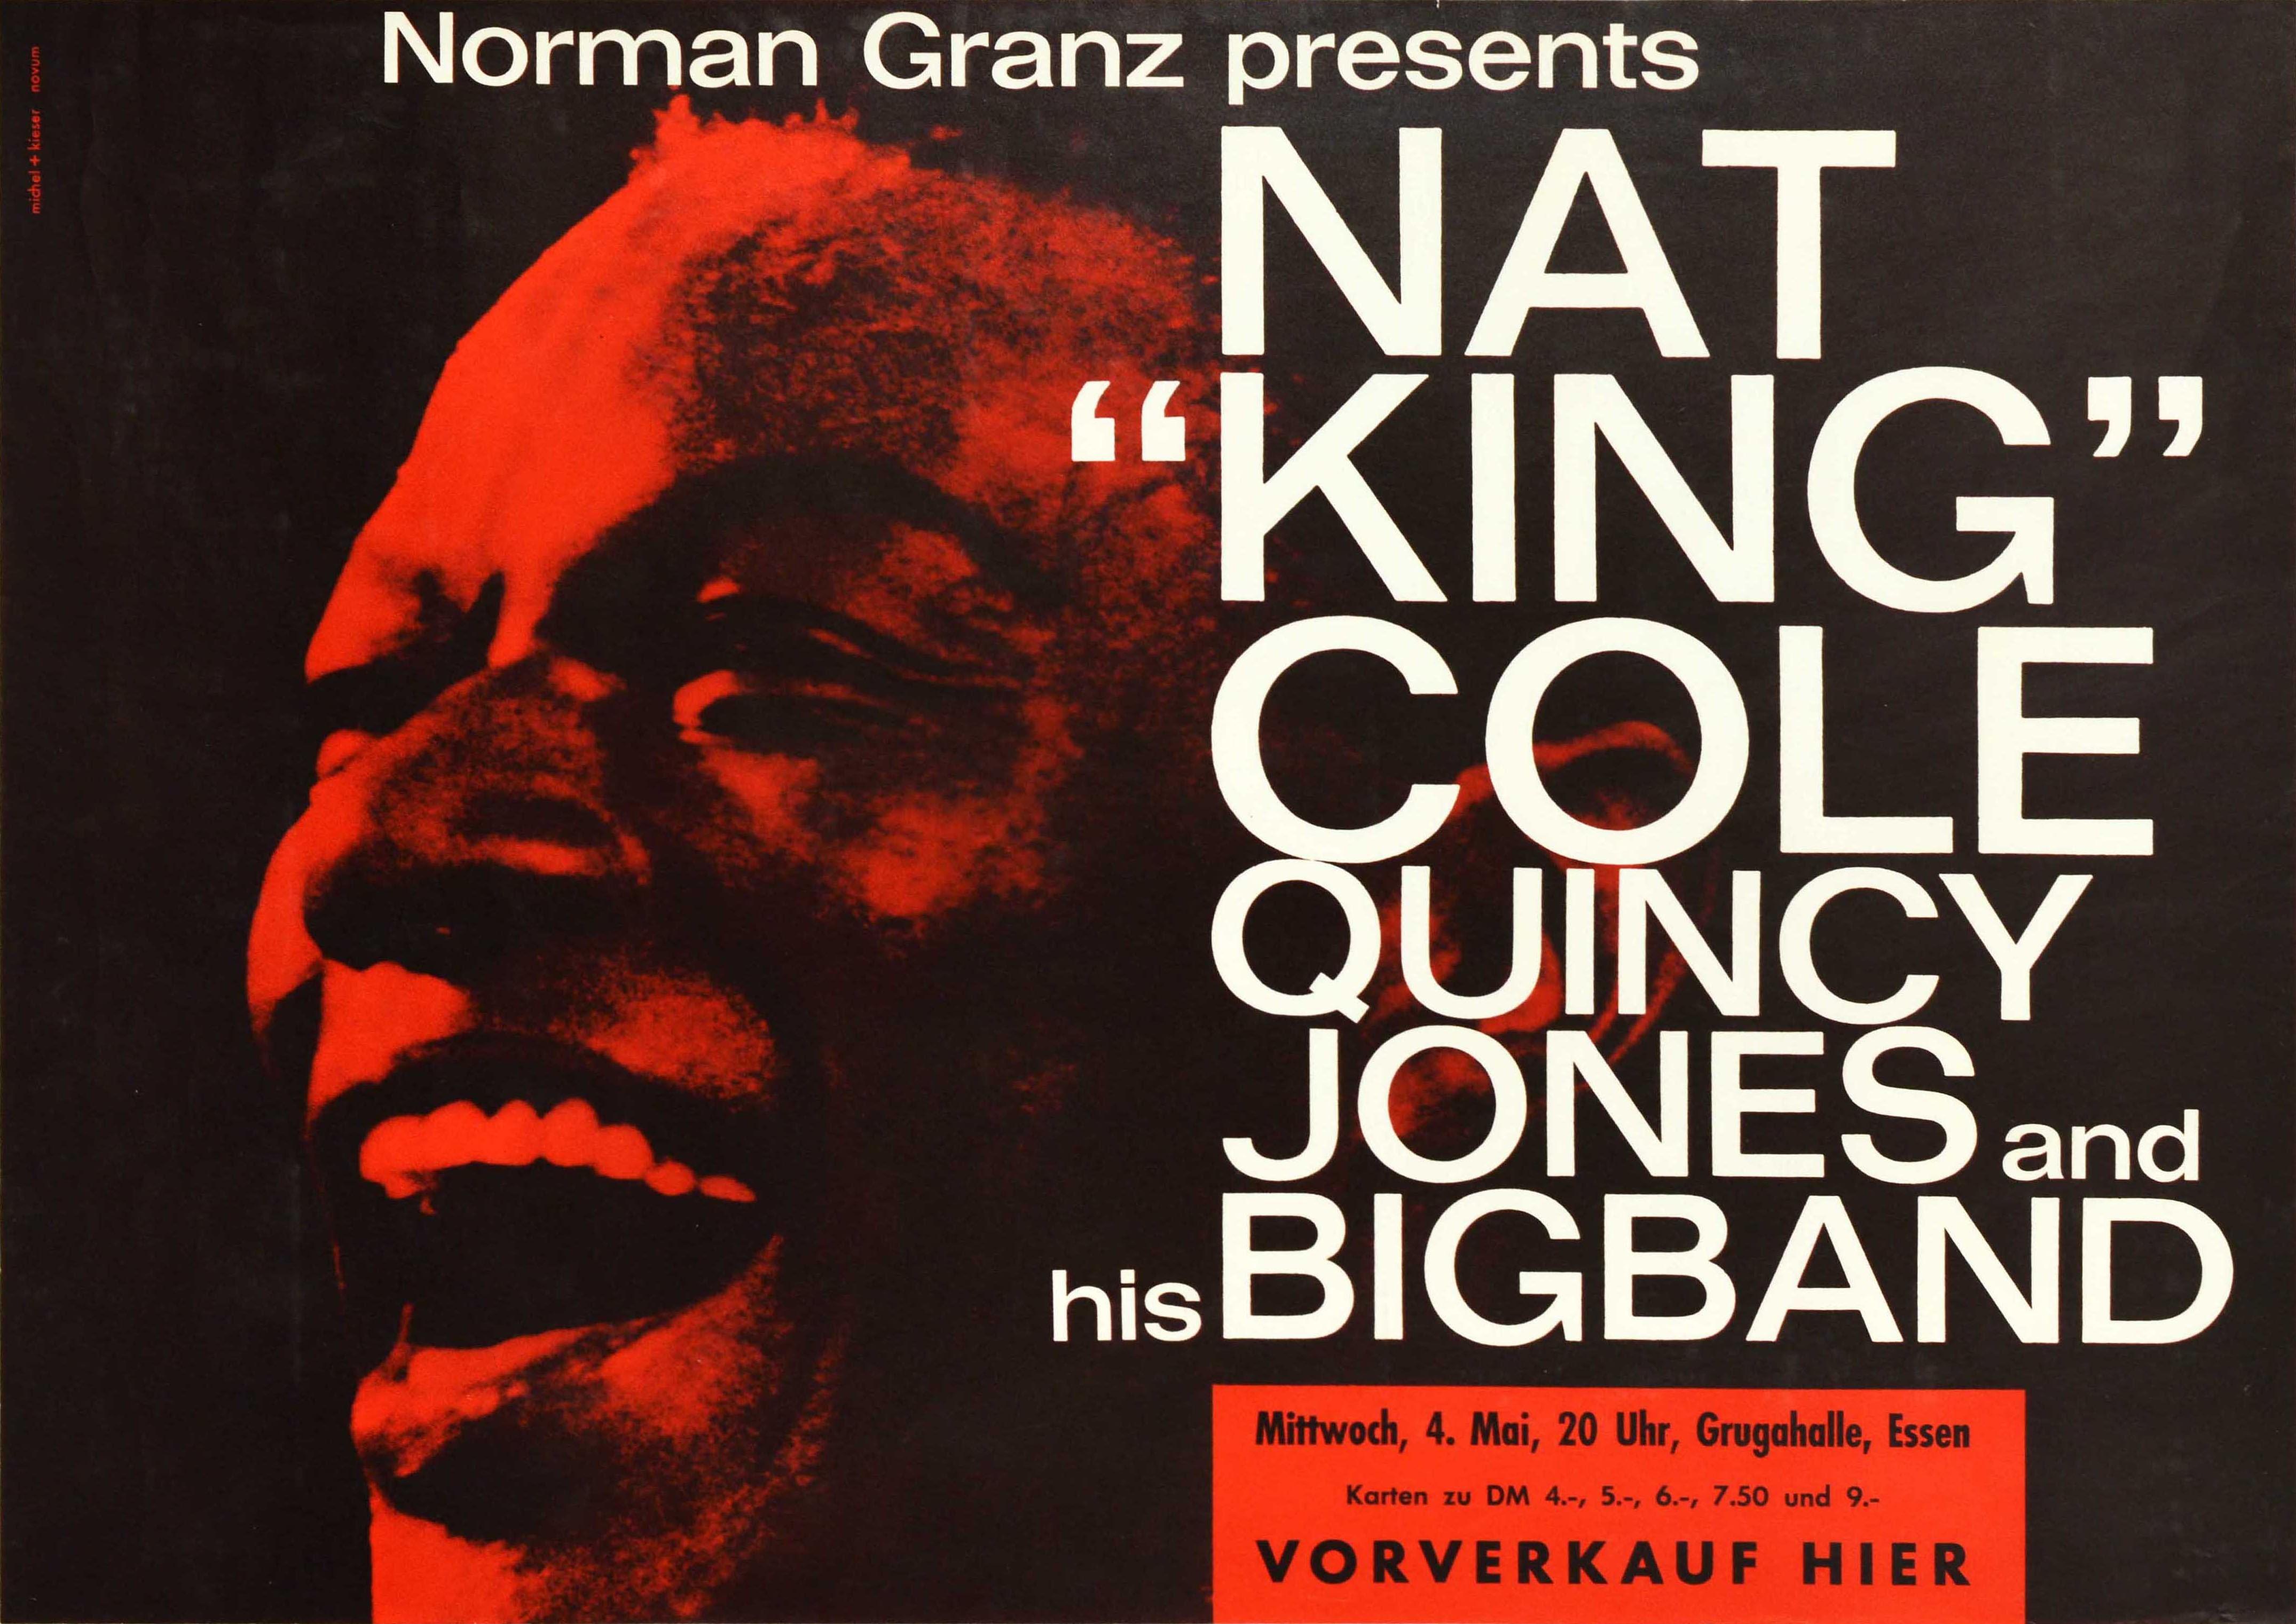 Original vintage music poster for the Norman Granz presents Nat 